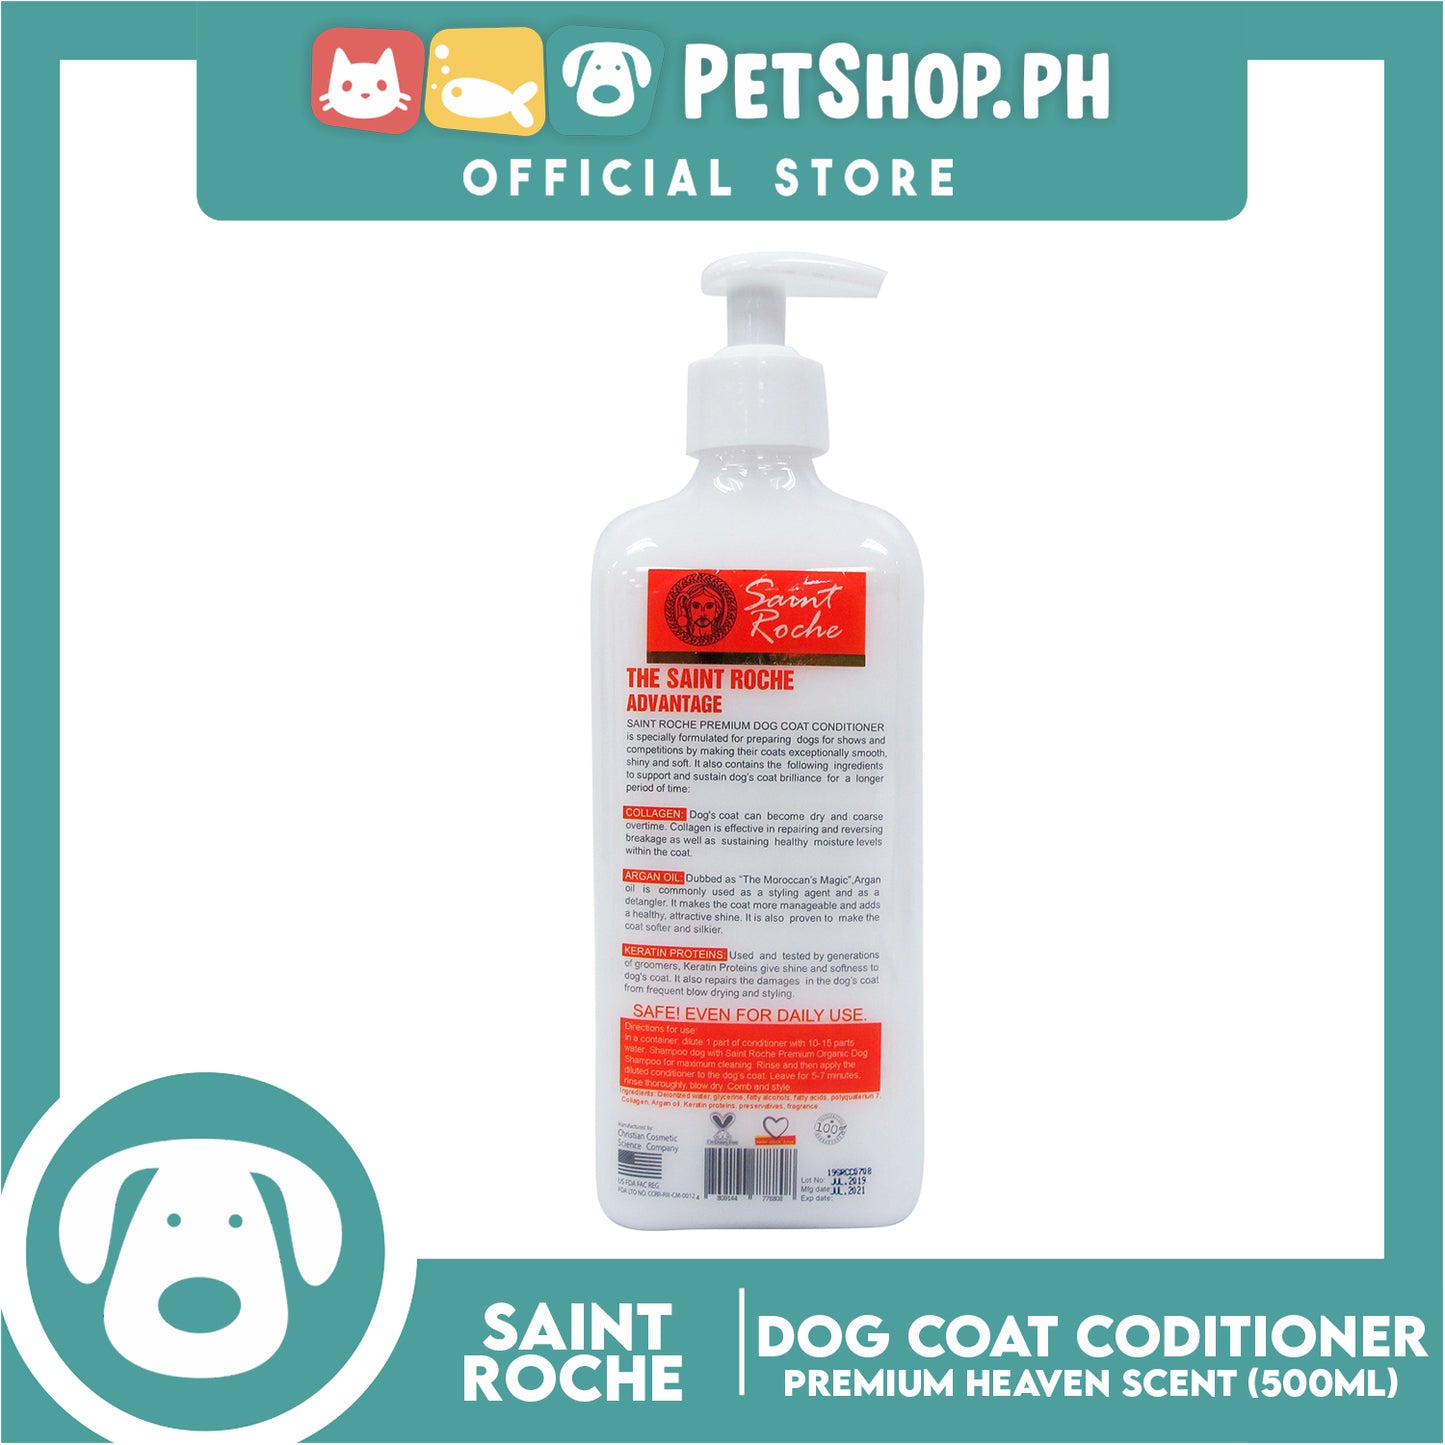 Saint Roche Premium Dog Coat Conditioner (Heaven Scent) 500ml For Dog Show Preparation